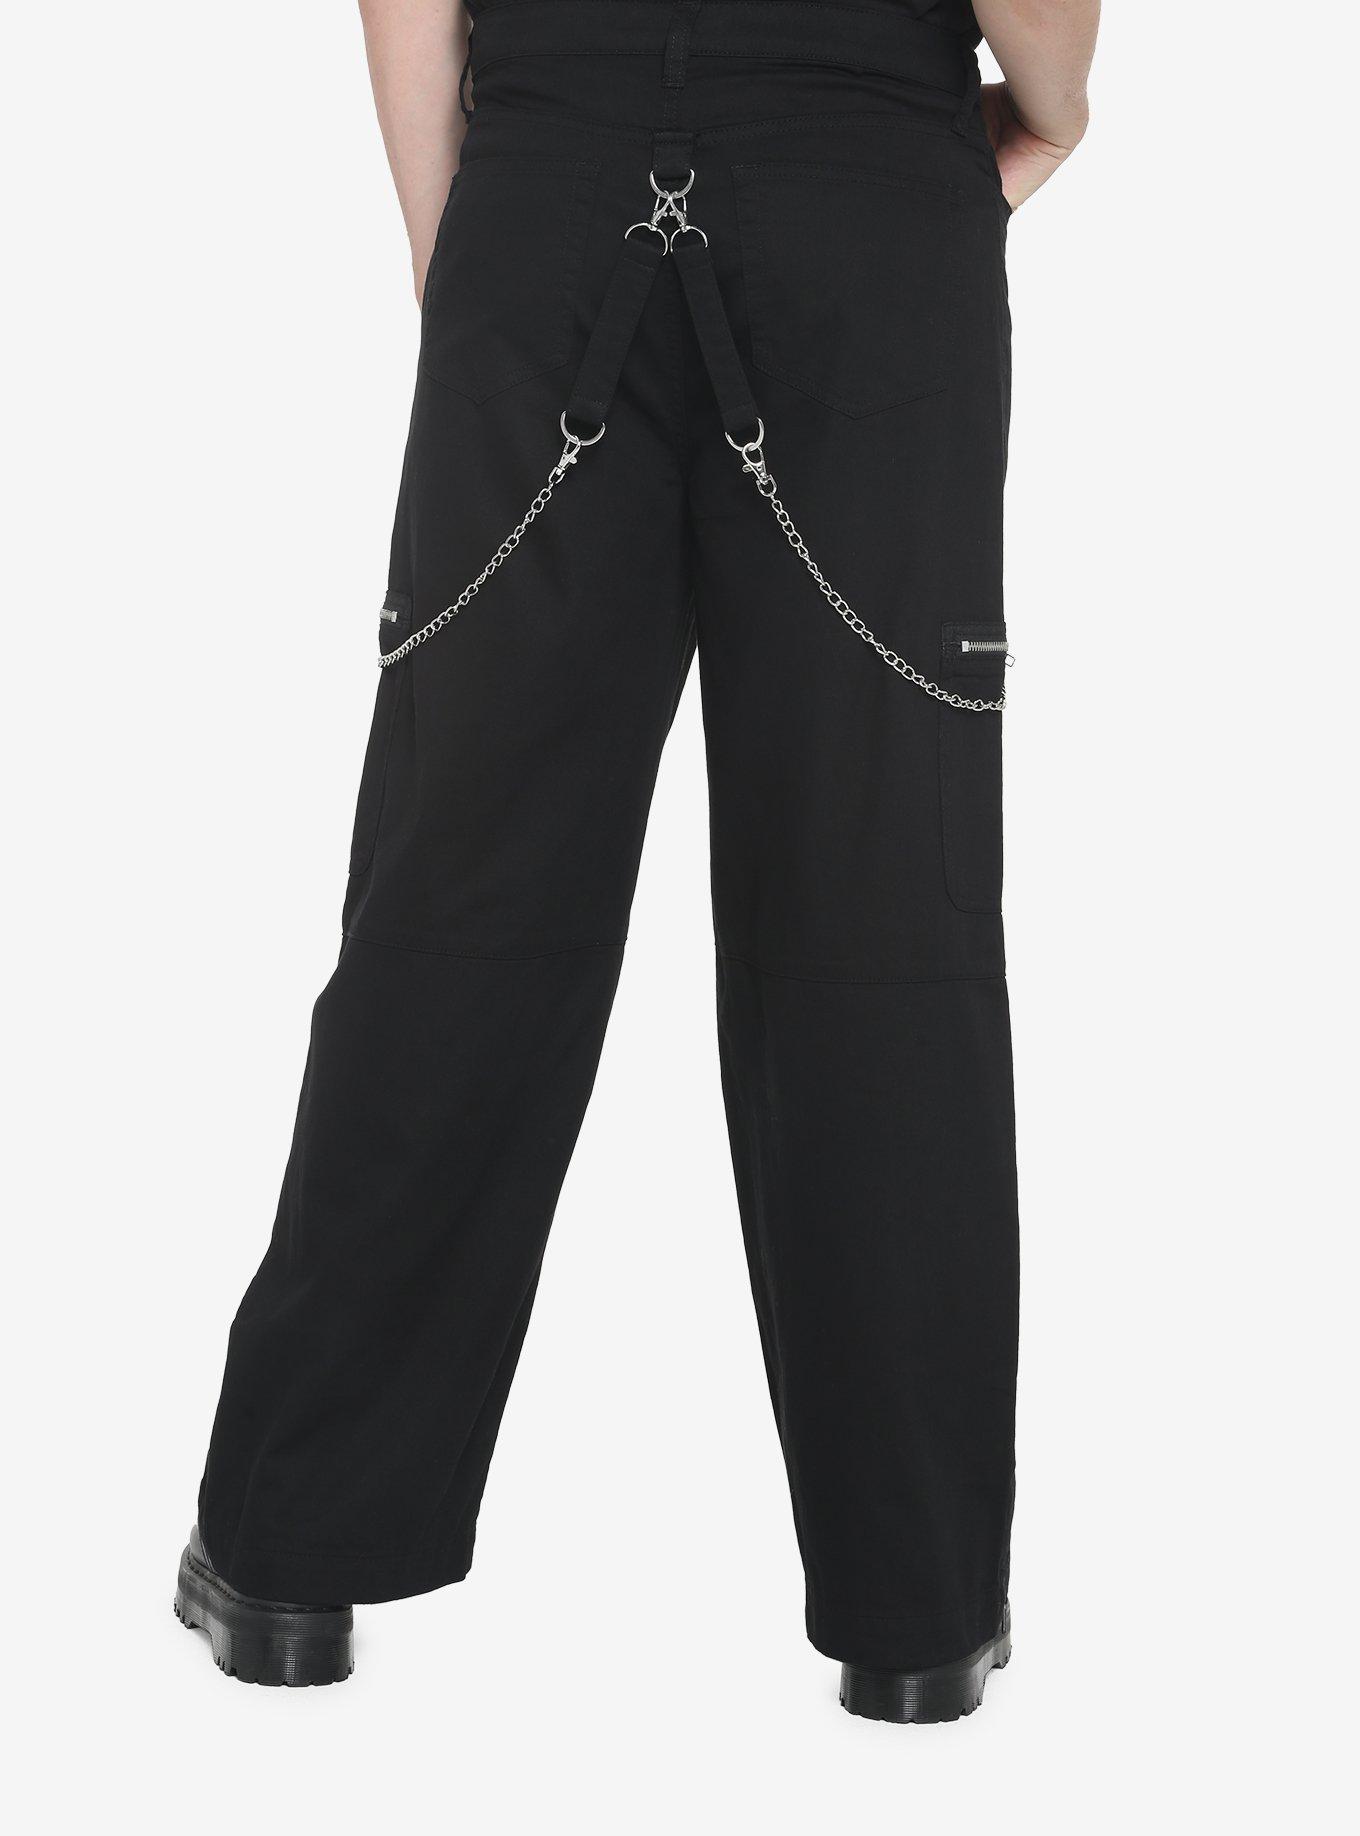 Black Zippers & Chains Wide Leg Jeans, BLACK, alternate